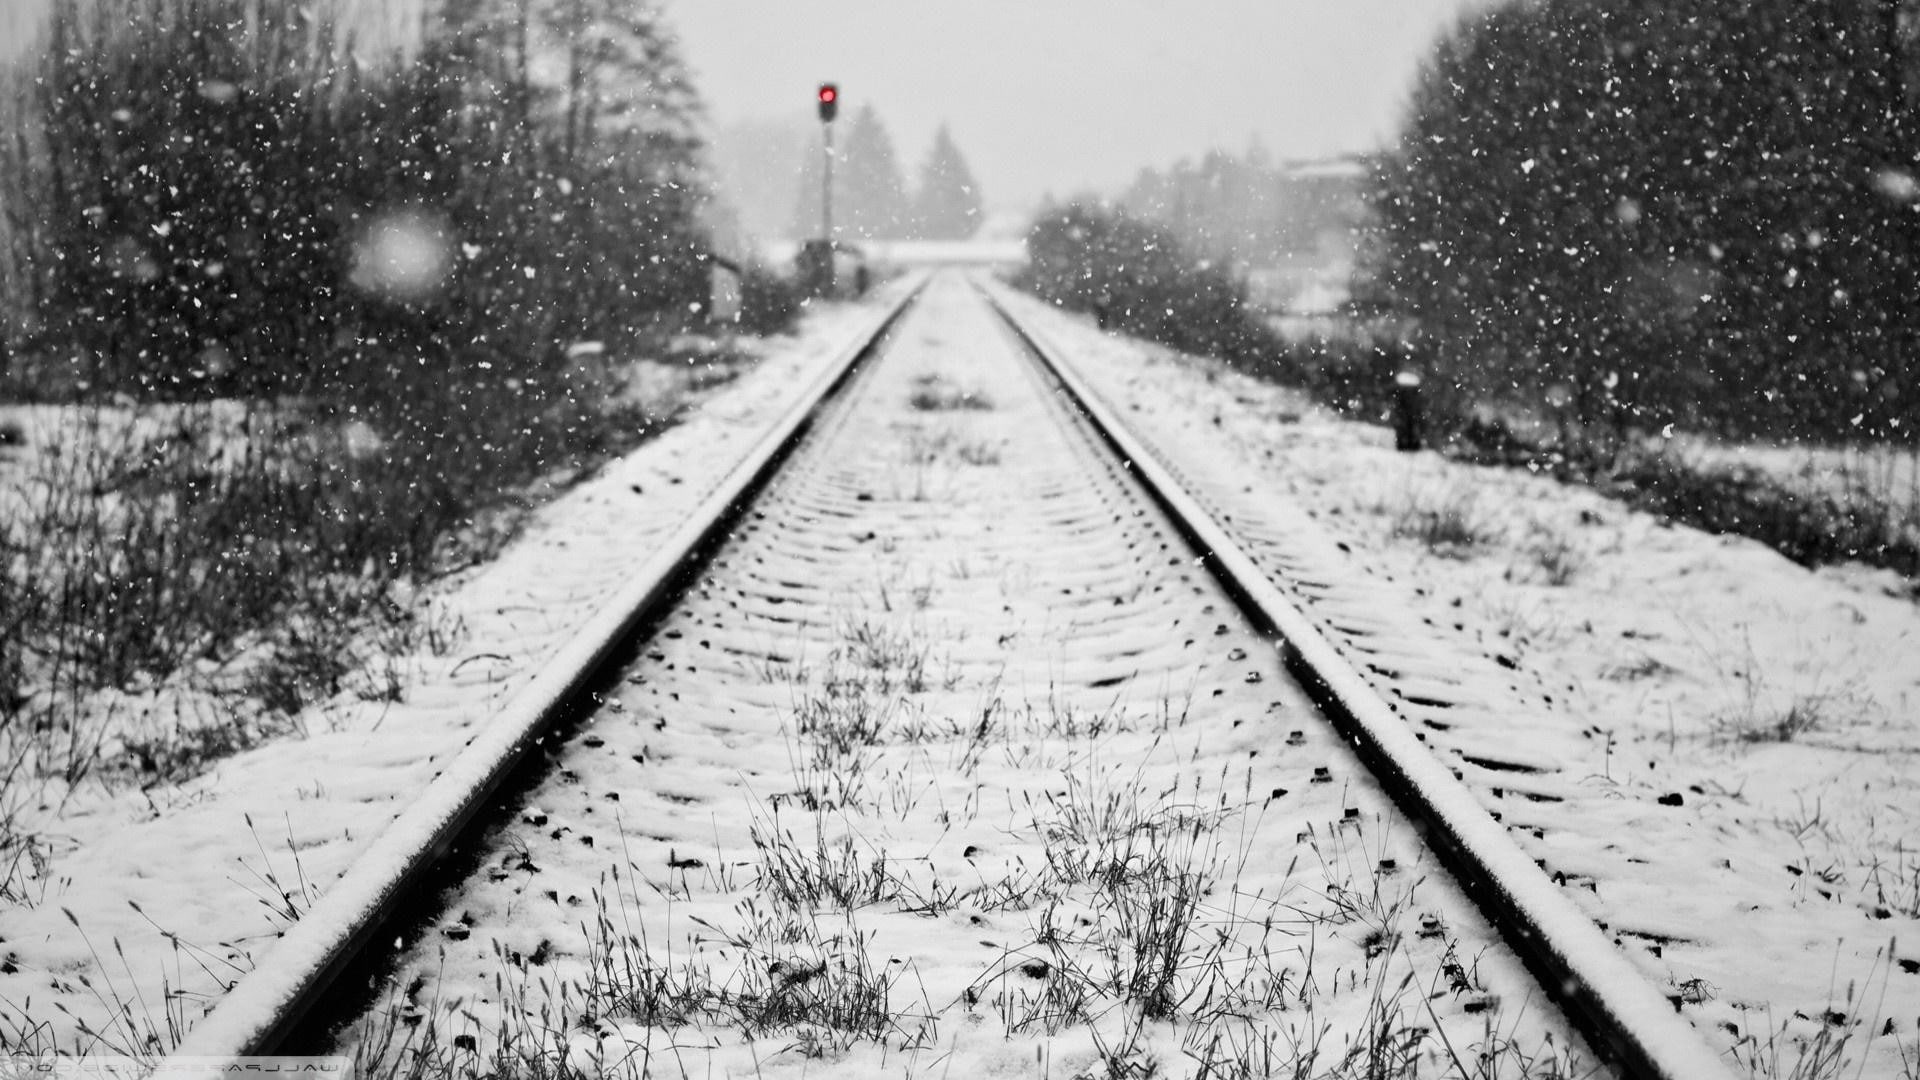 railway, snow, winter, snowing, railroad track, overcast, transportation